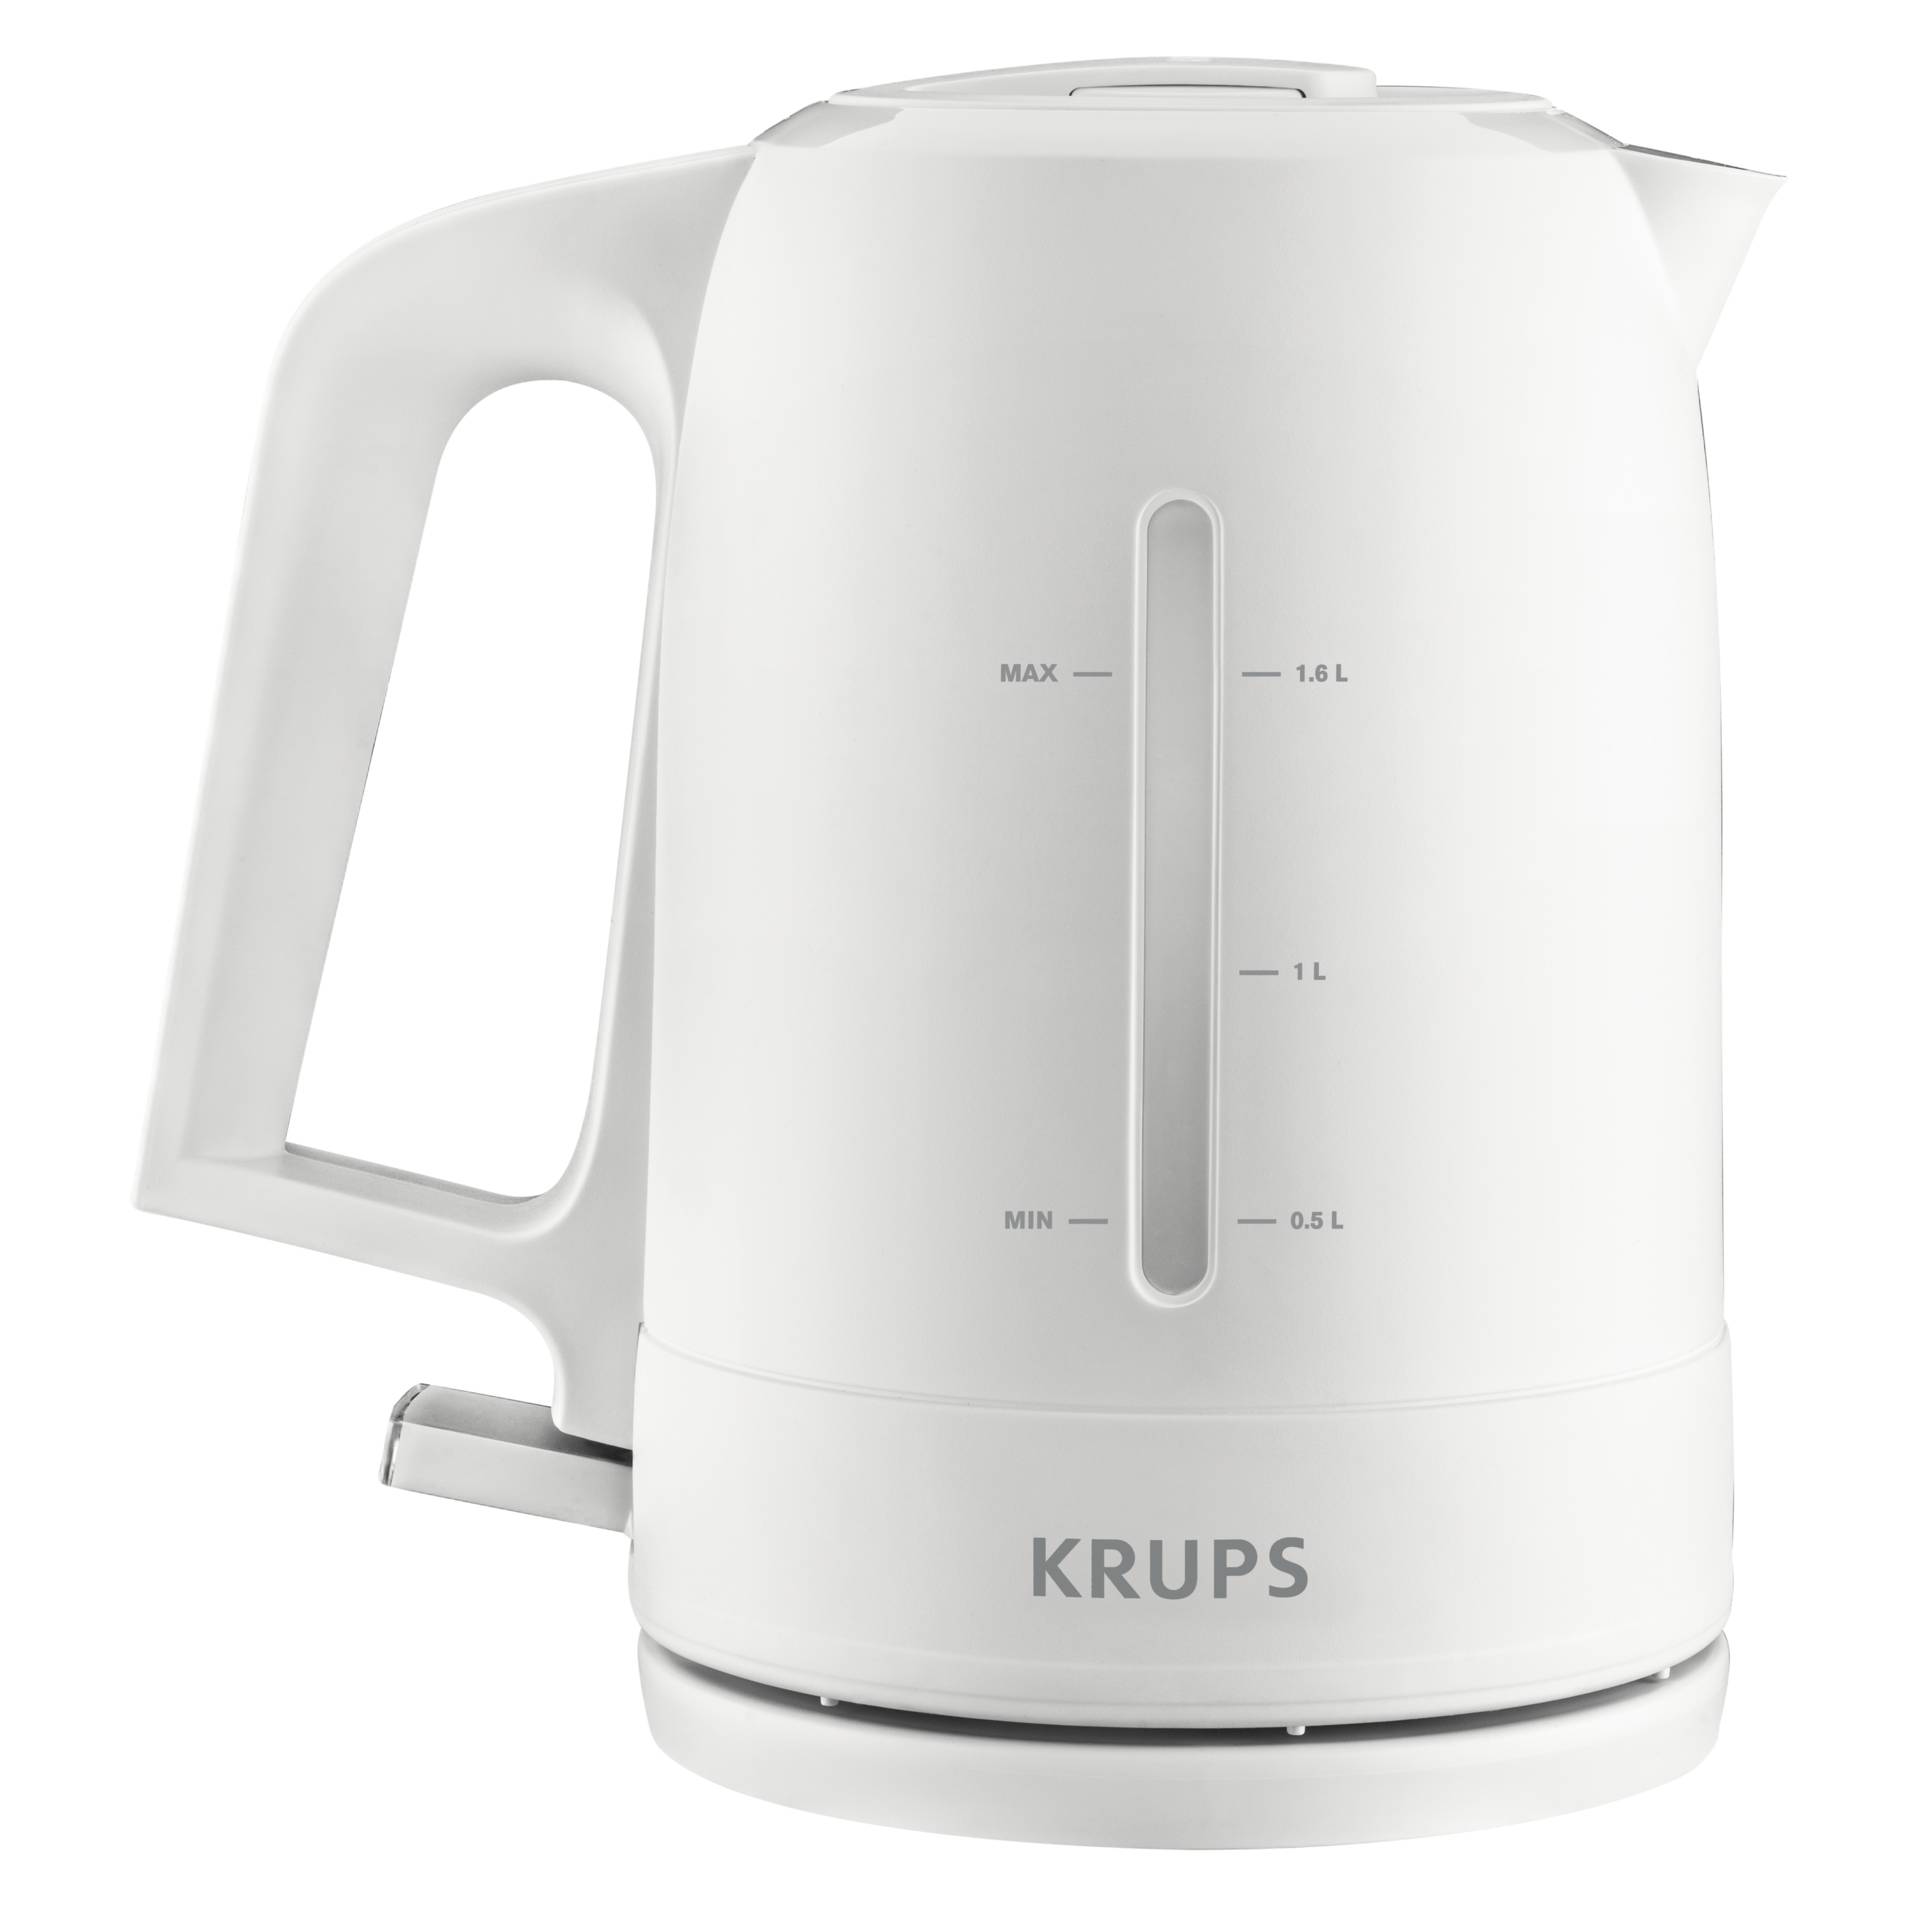 Krups -6 Liter Weiß BW2441 Pro Aroma Wasserkocher 1 (BW2441) -Krups  Hardware/Electronic